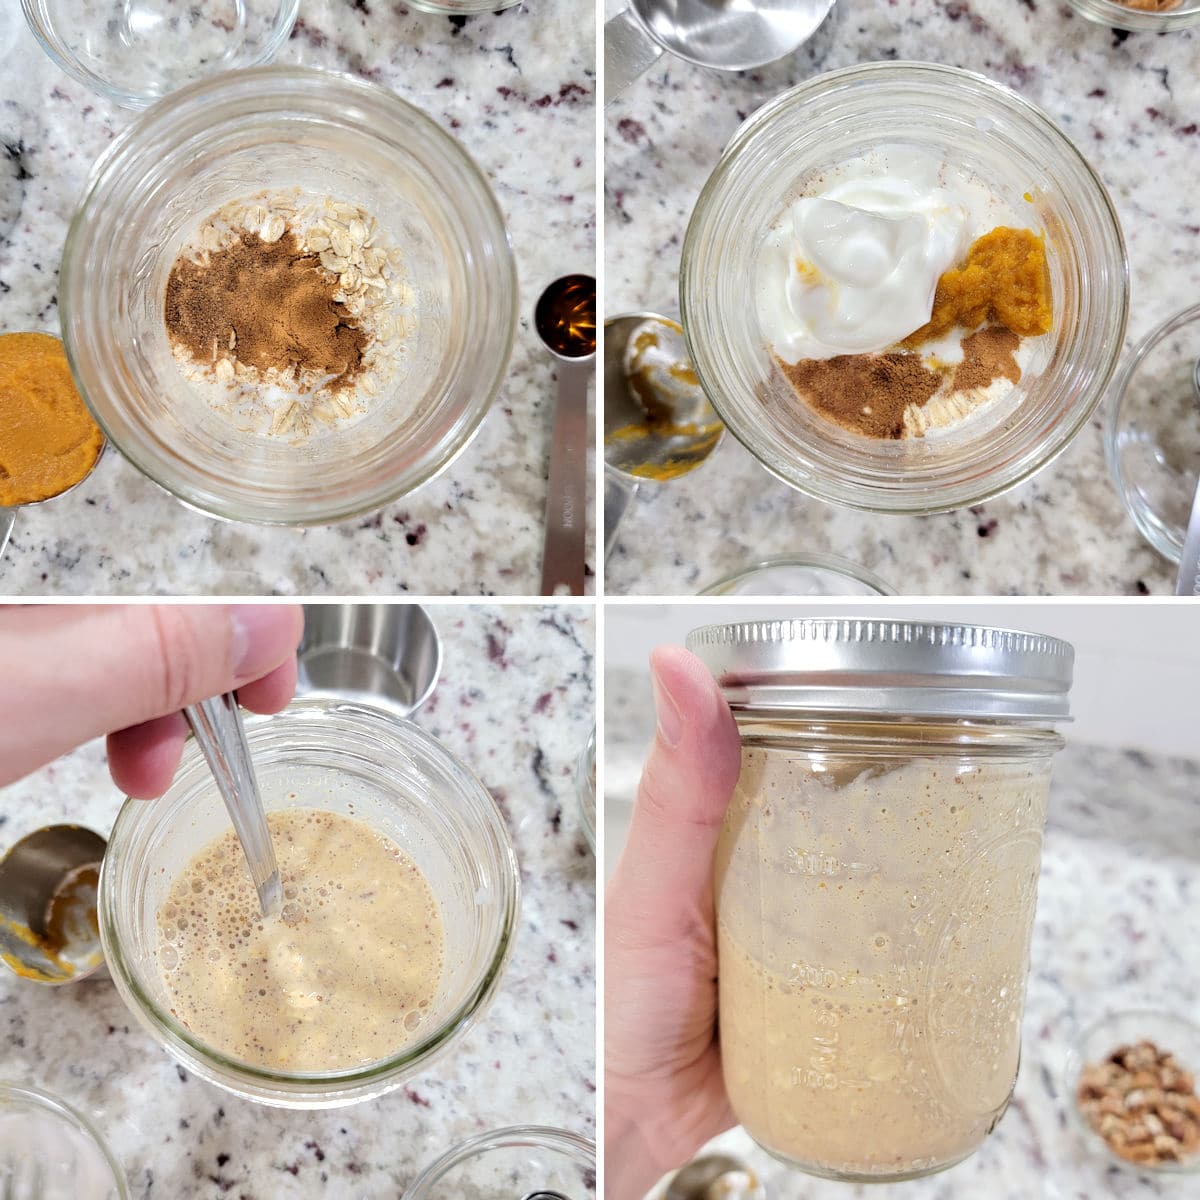 Mixing overnight oats in a glass mason jar.